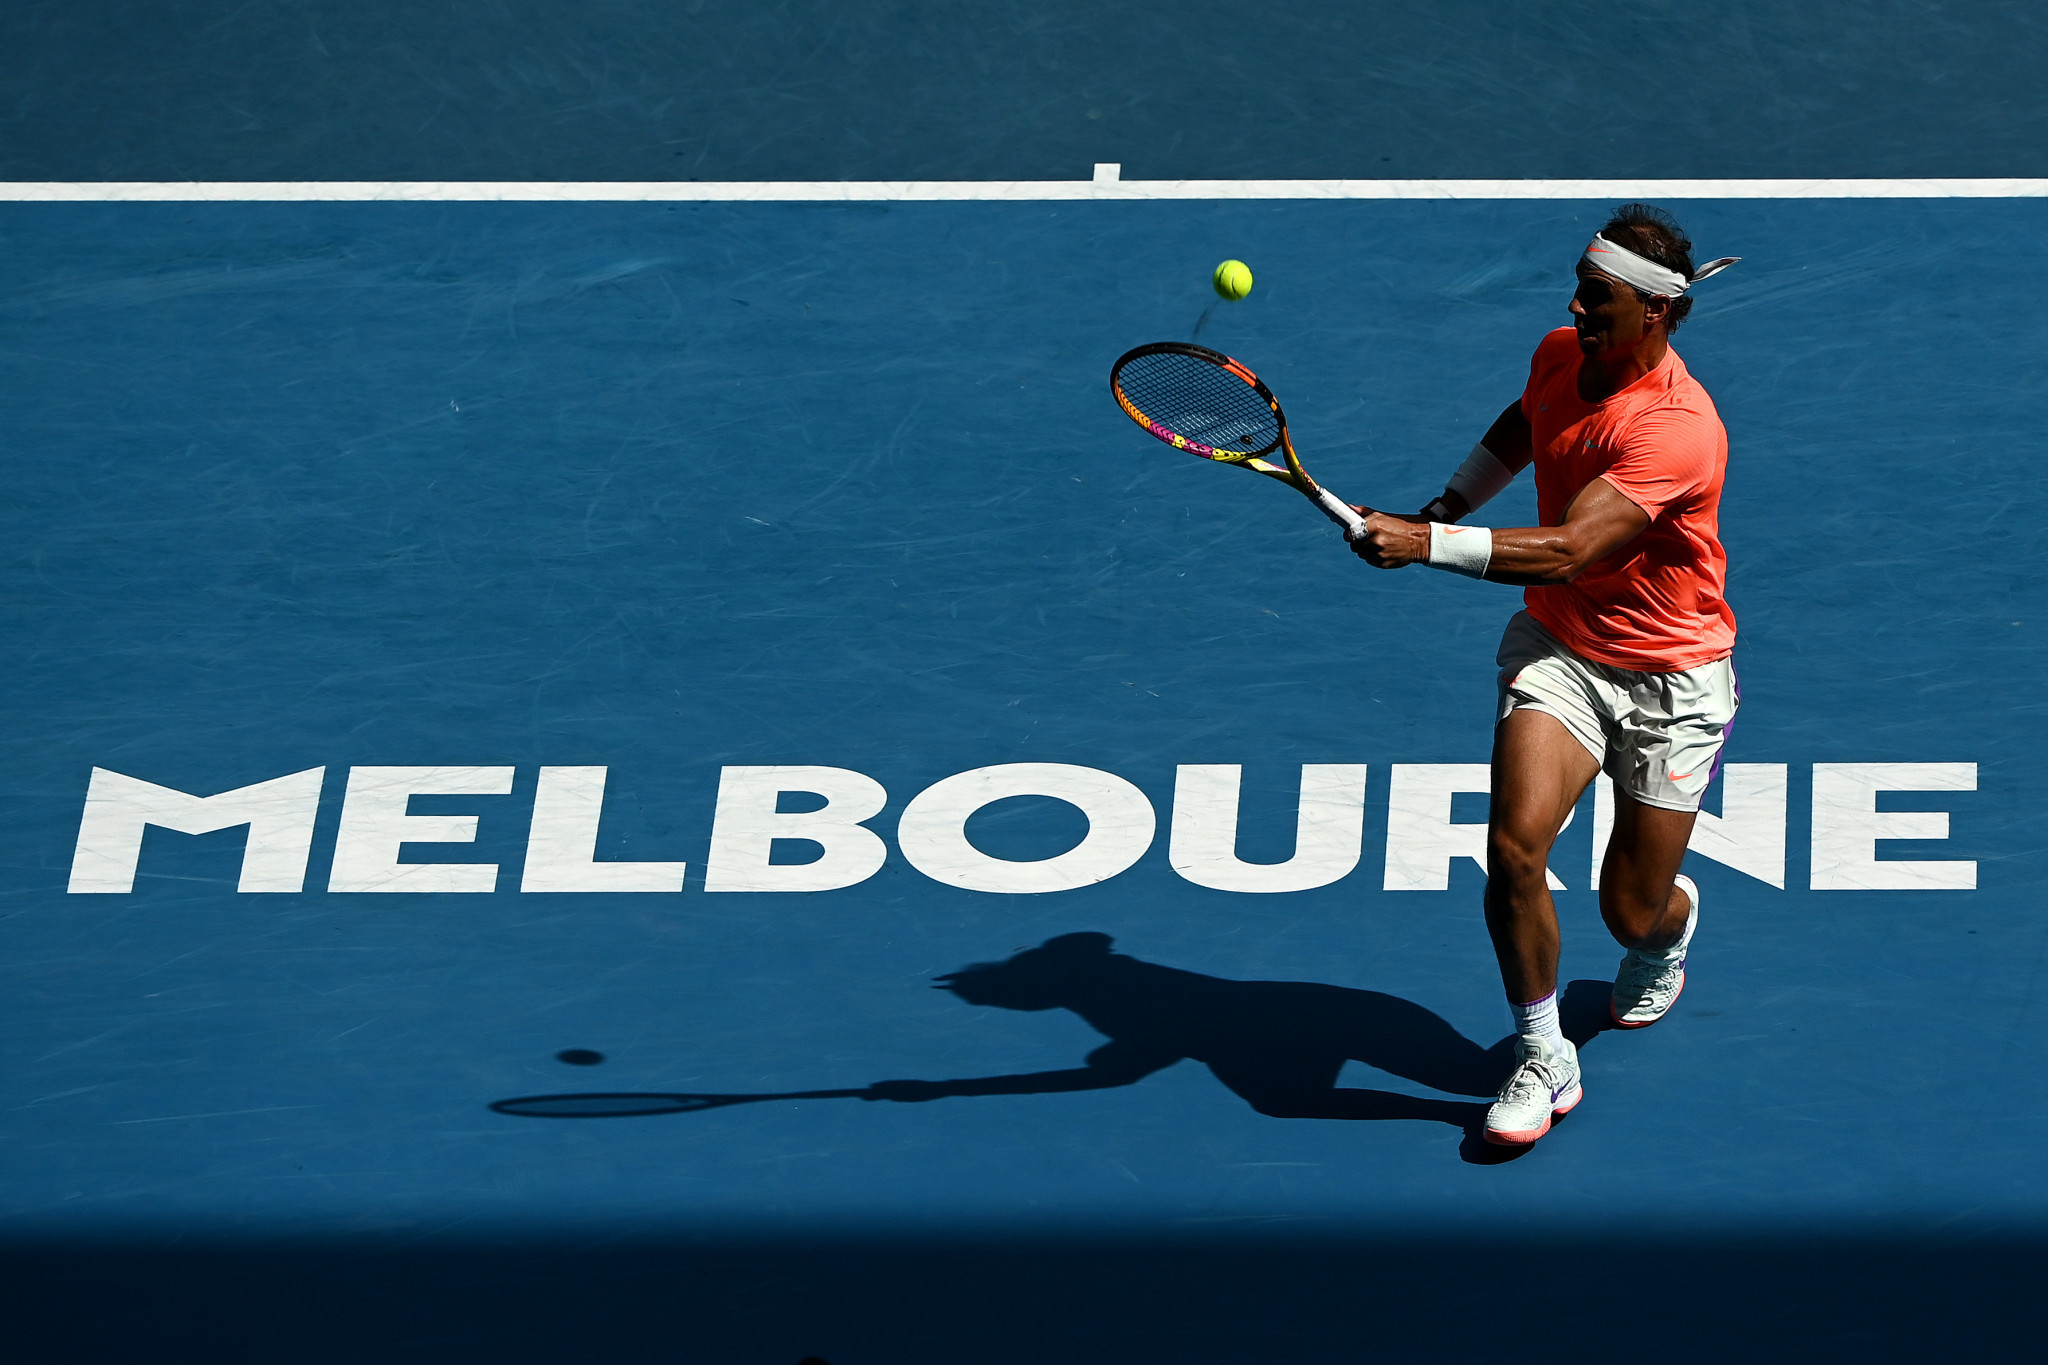 Spain's Rafael Nadal progressed to his 43rd Grand Slam quarter-final ©Getty Images